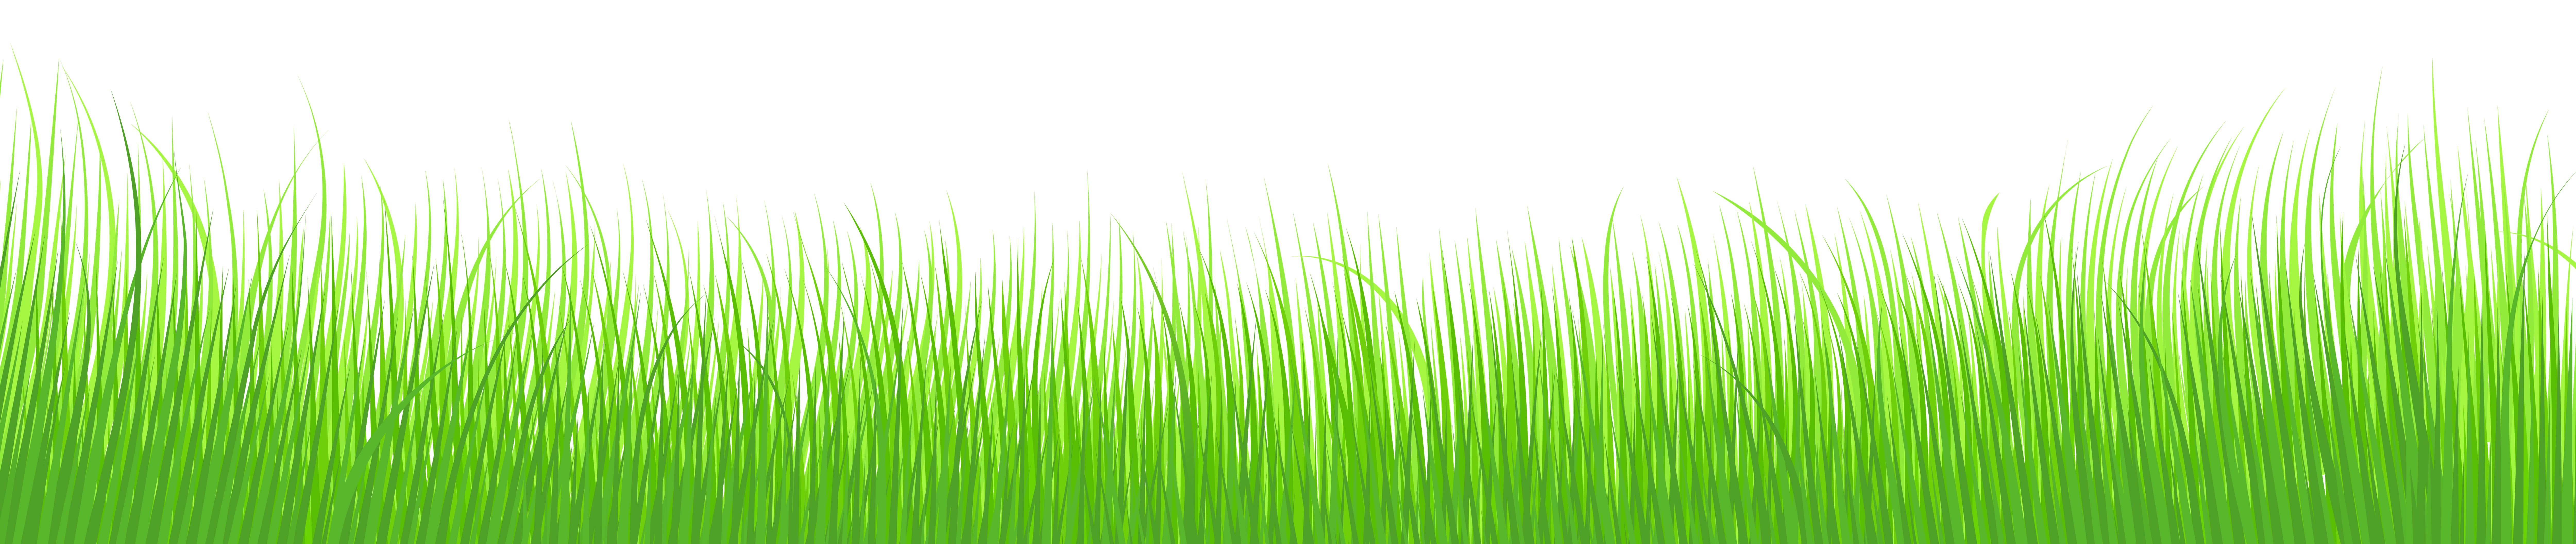 Grass background clipart